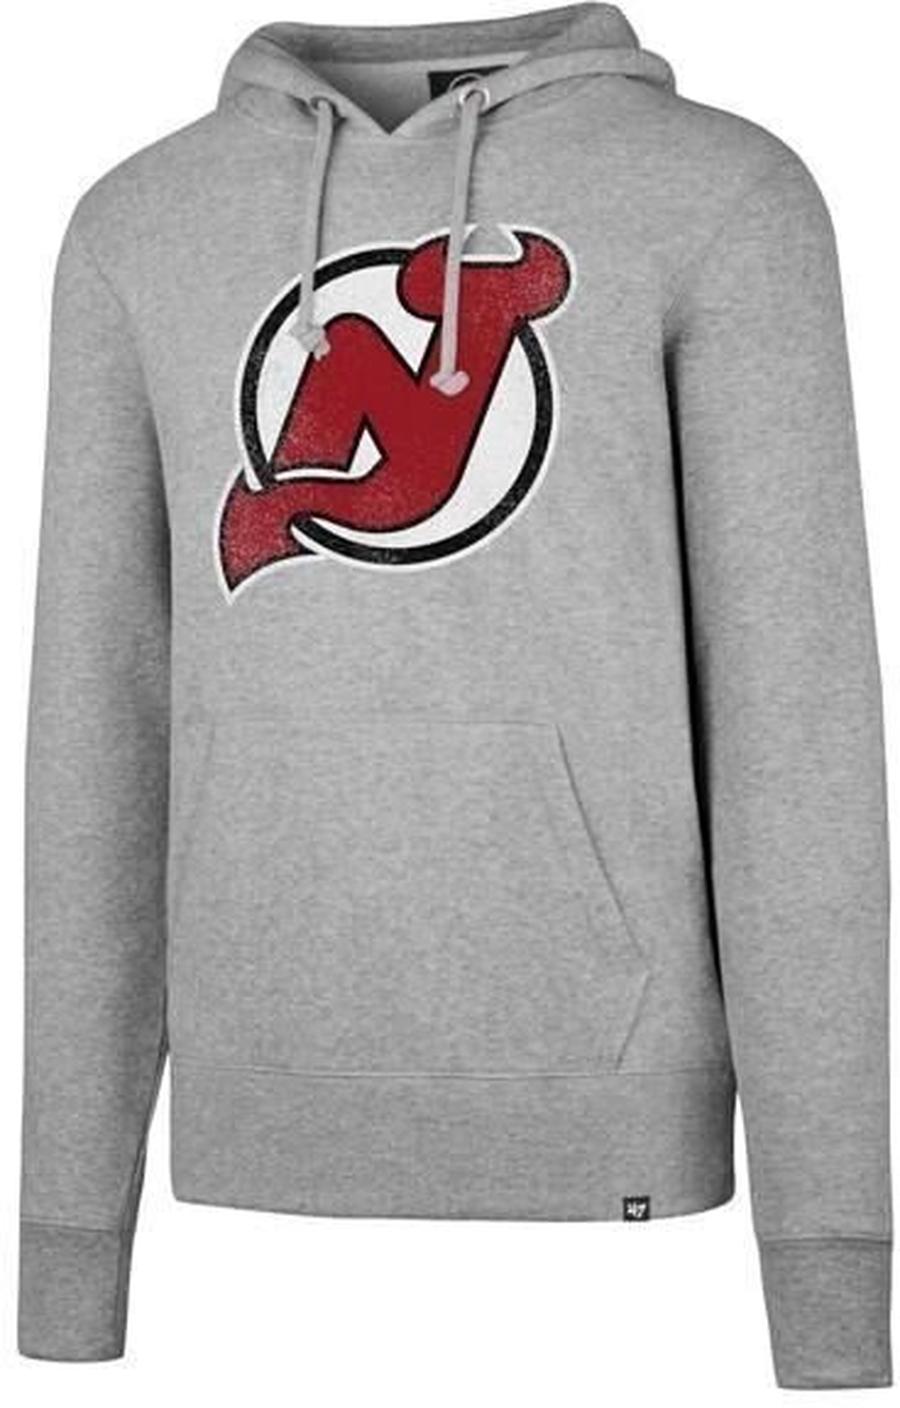 New Jersey Devils NHL Pullover Slate Grey XL